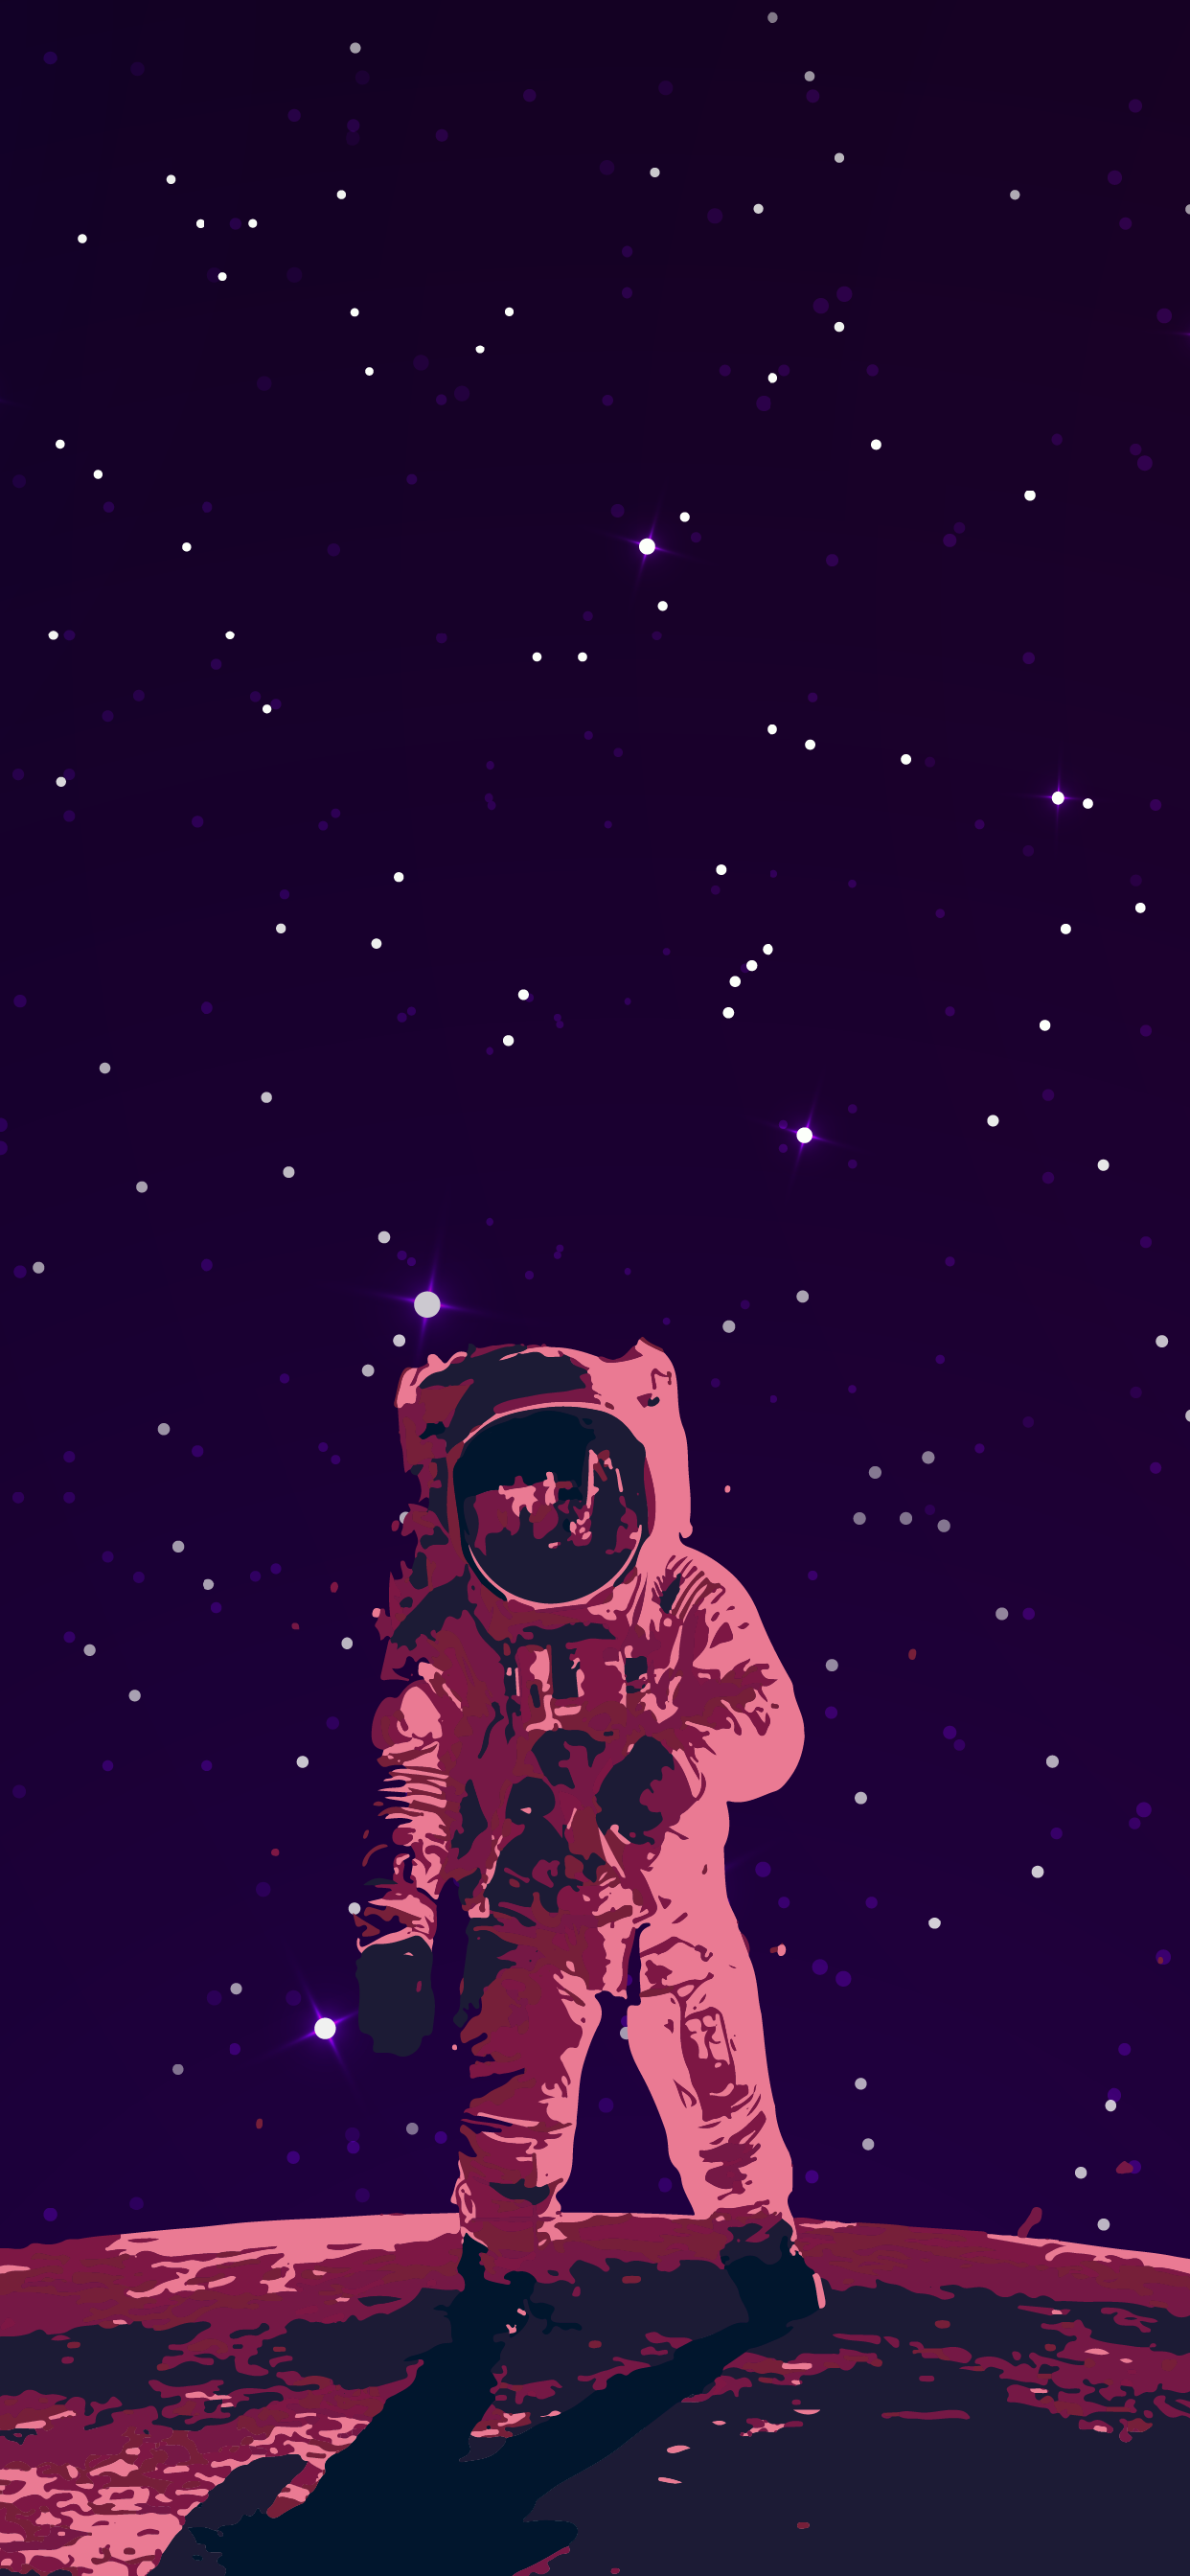 Astronaut wallpaper wallpaper by KaruMizoumi  Download on ZEDGE  f1bd